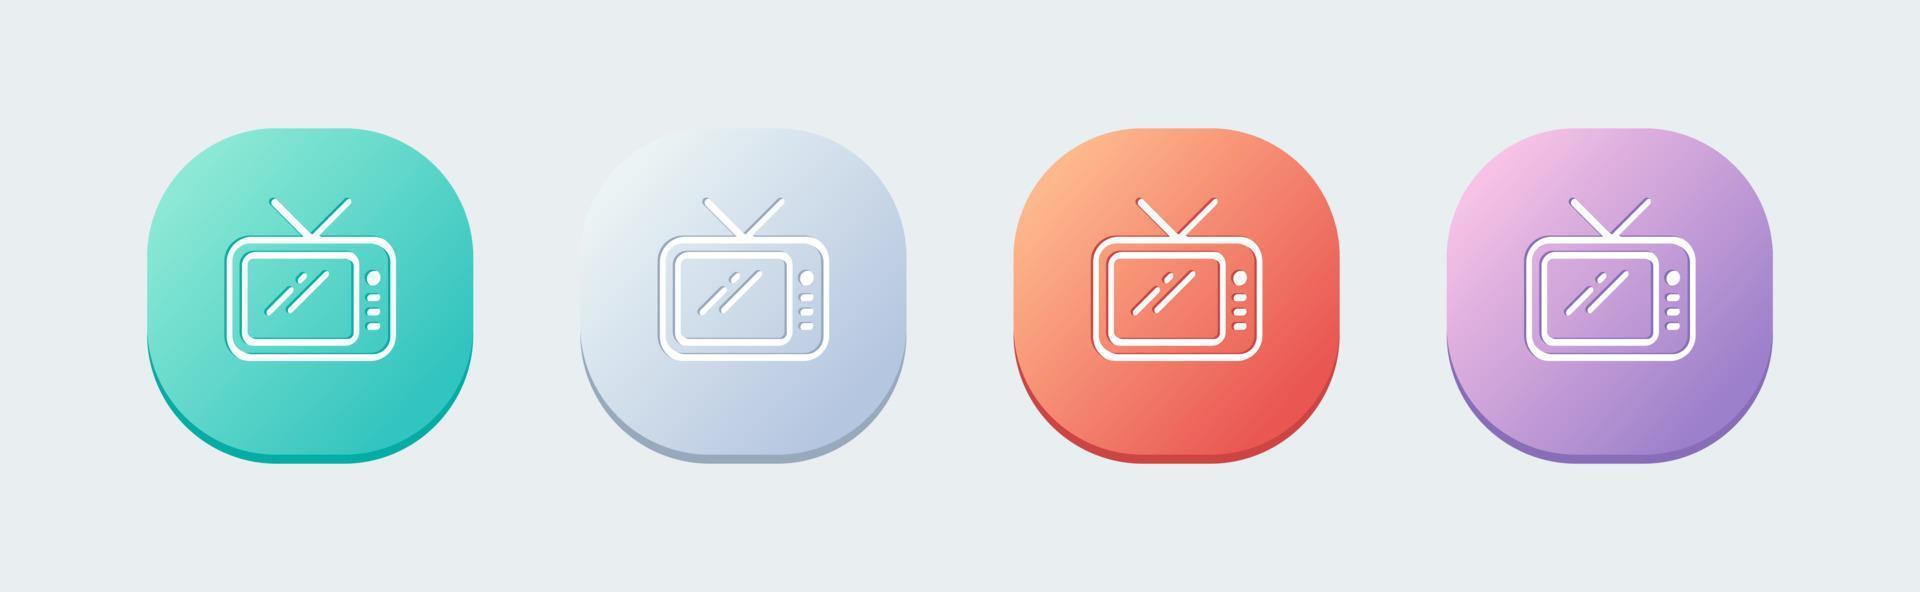 Tv line icon in flat design style. Retro tv signs vector illustration.